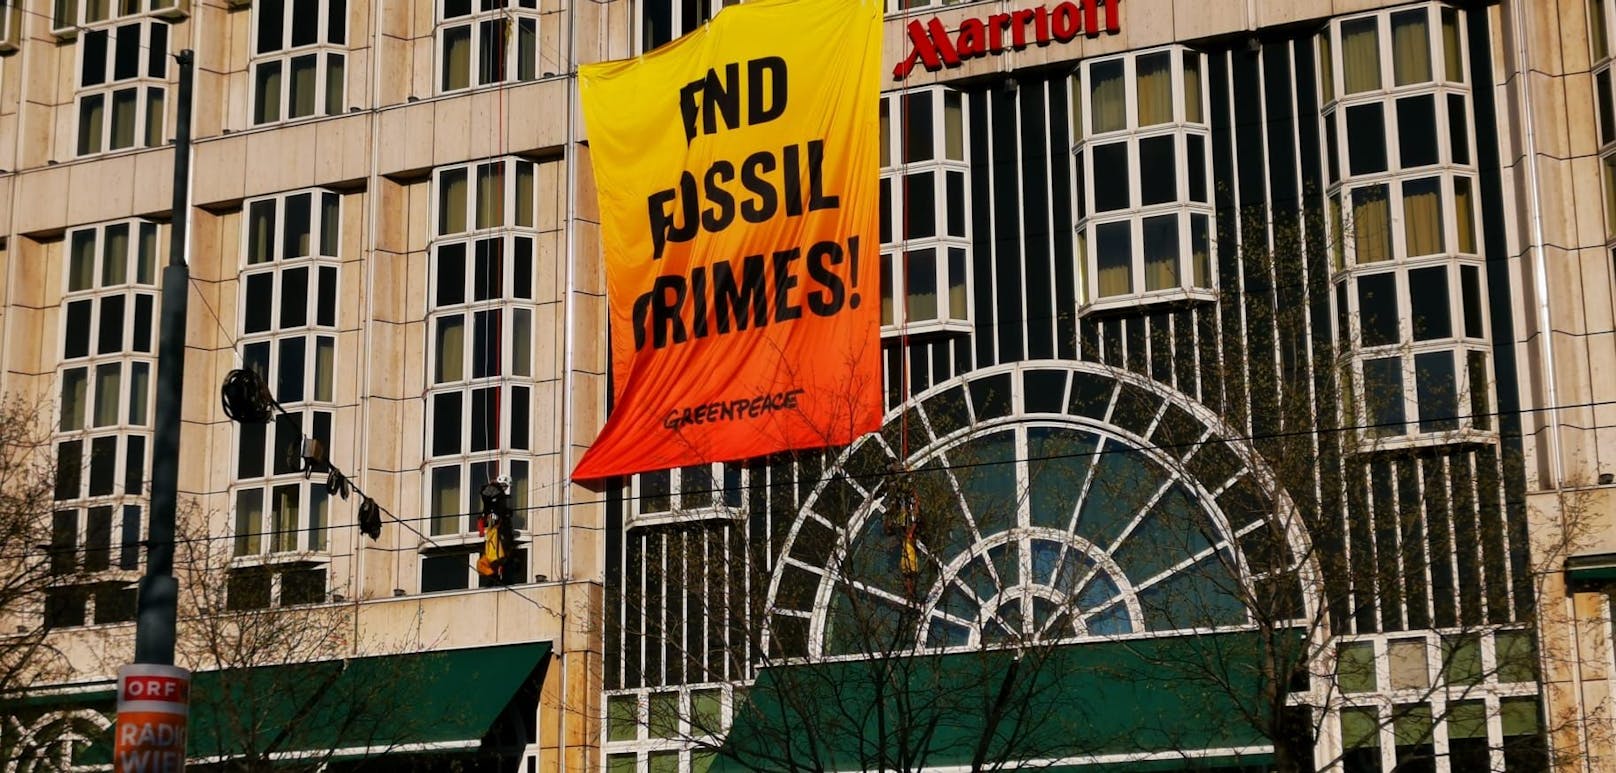 "End Fossil Crimes", so der Wortlaut des Greenpeace-Plakates.